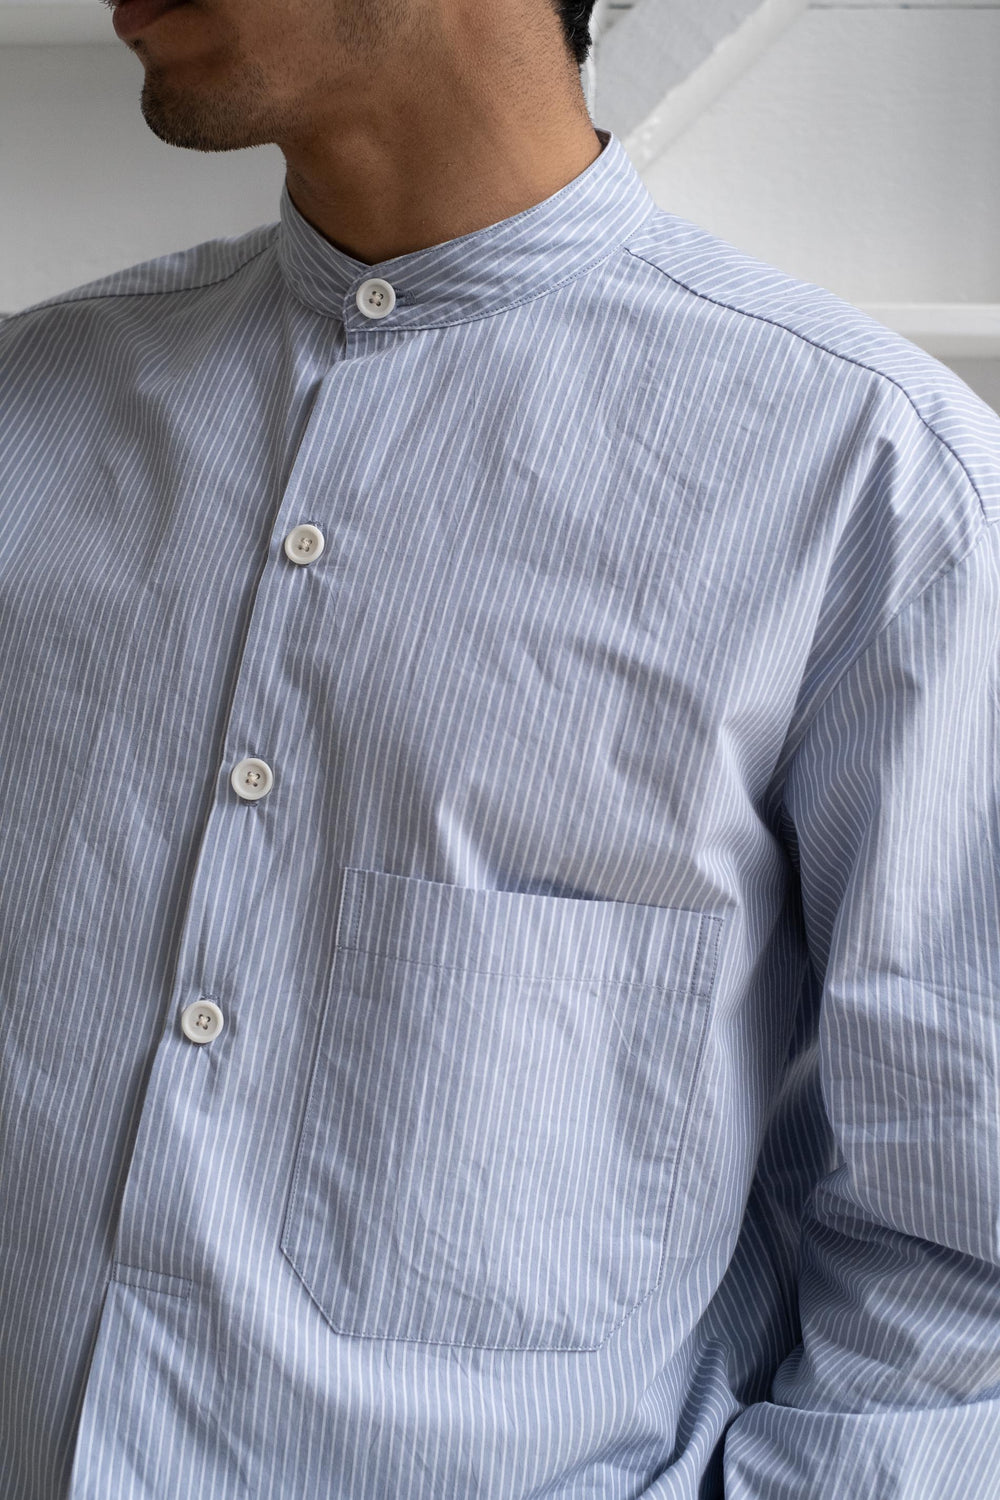 Popover Shirt In Light Blue Organic Cotton Stripe